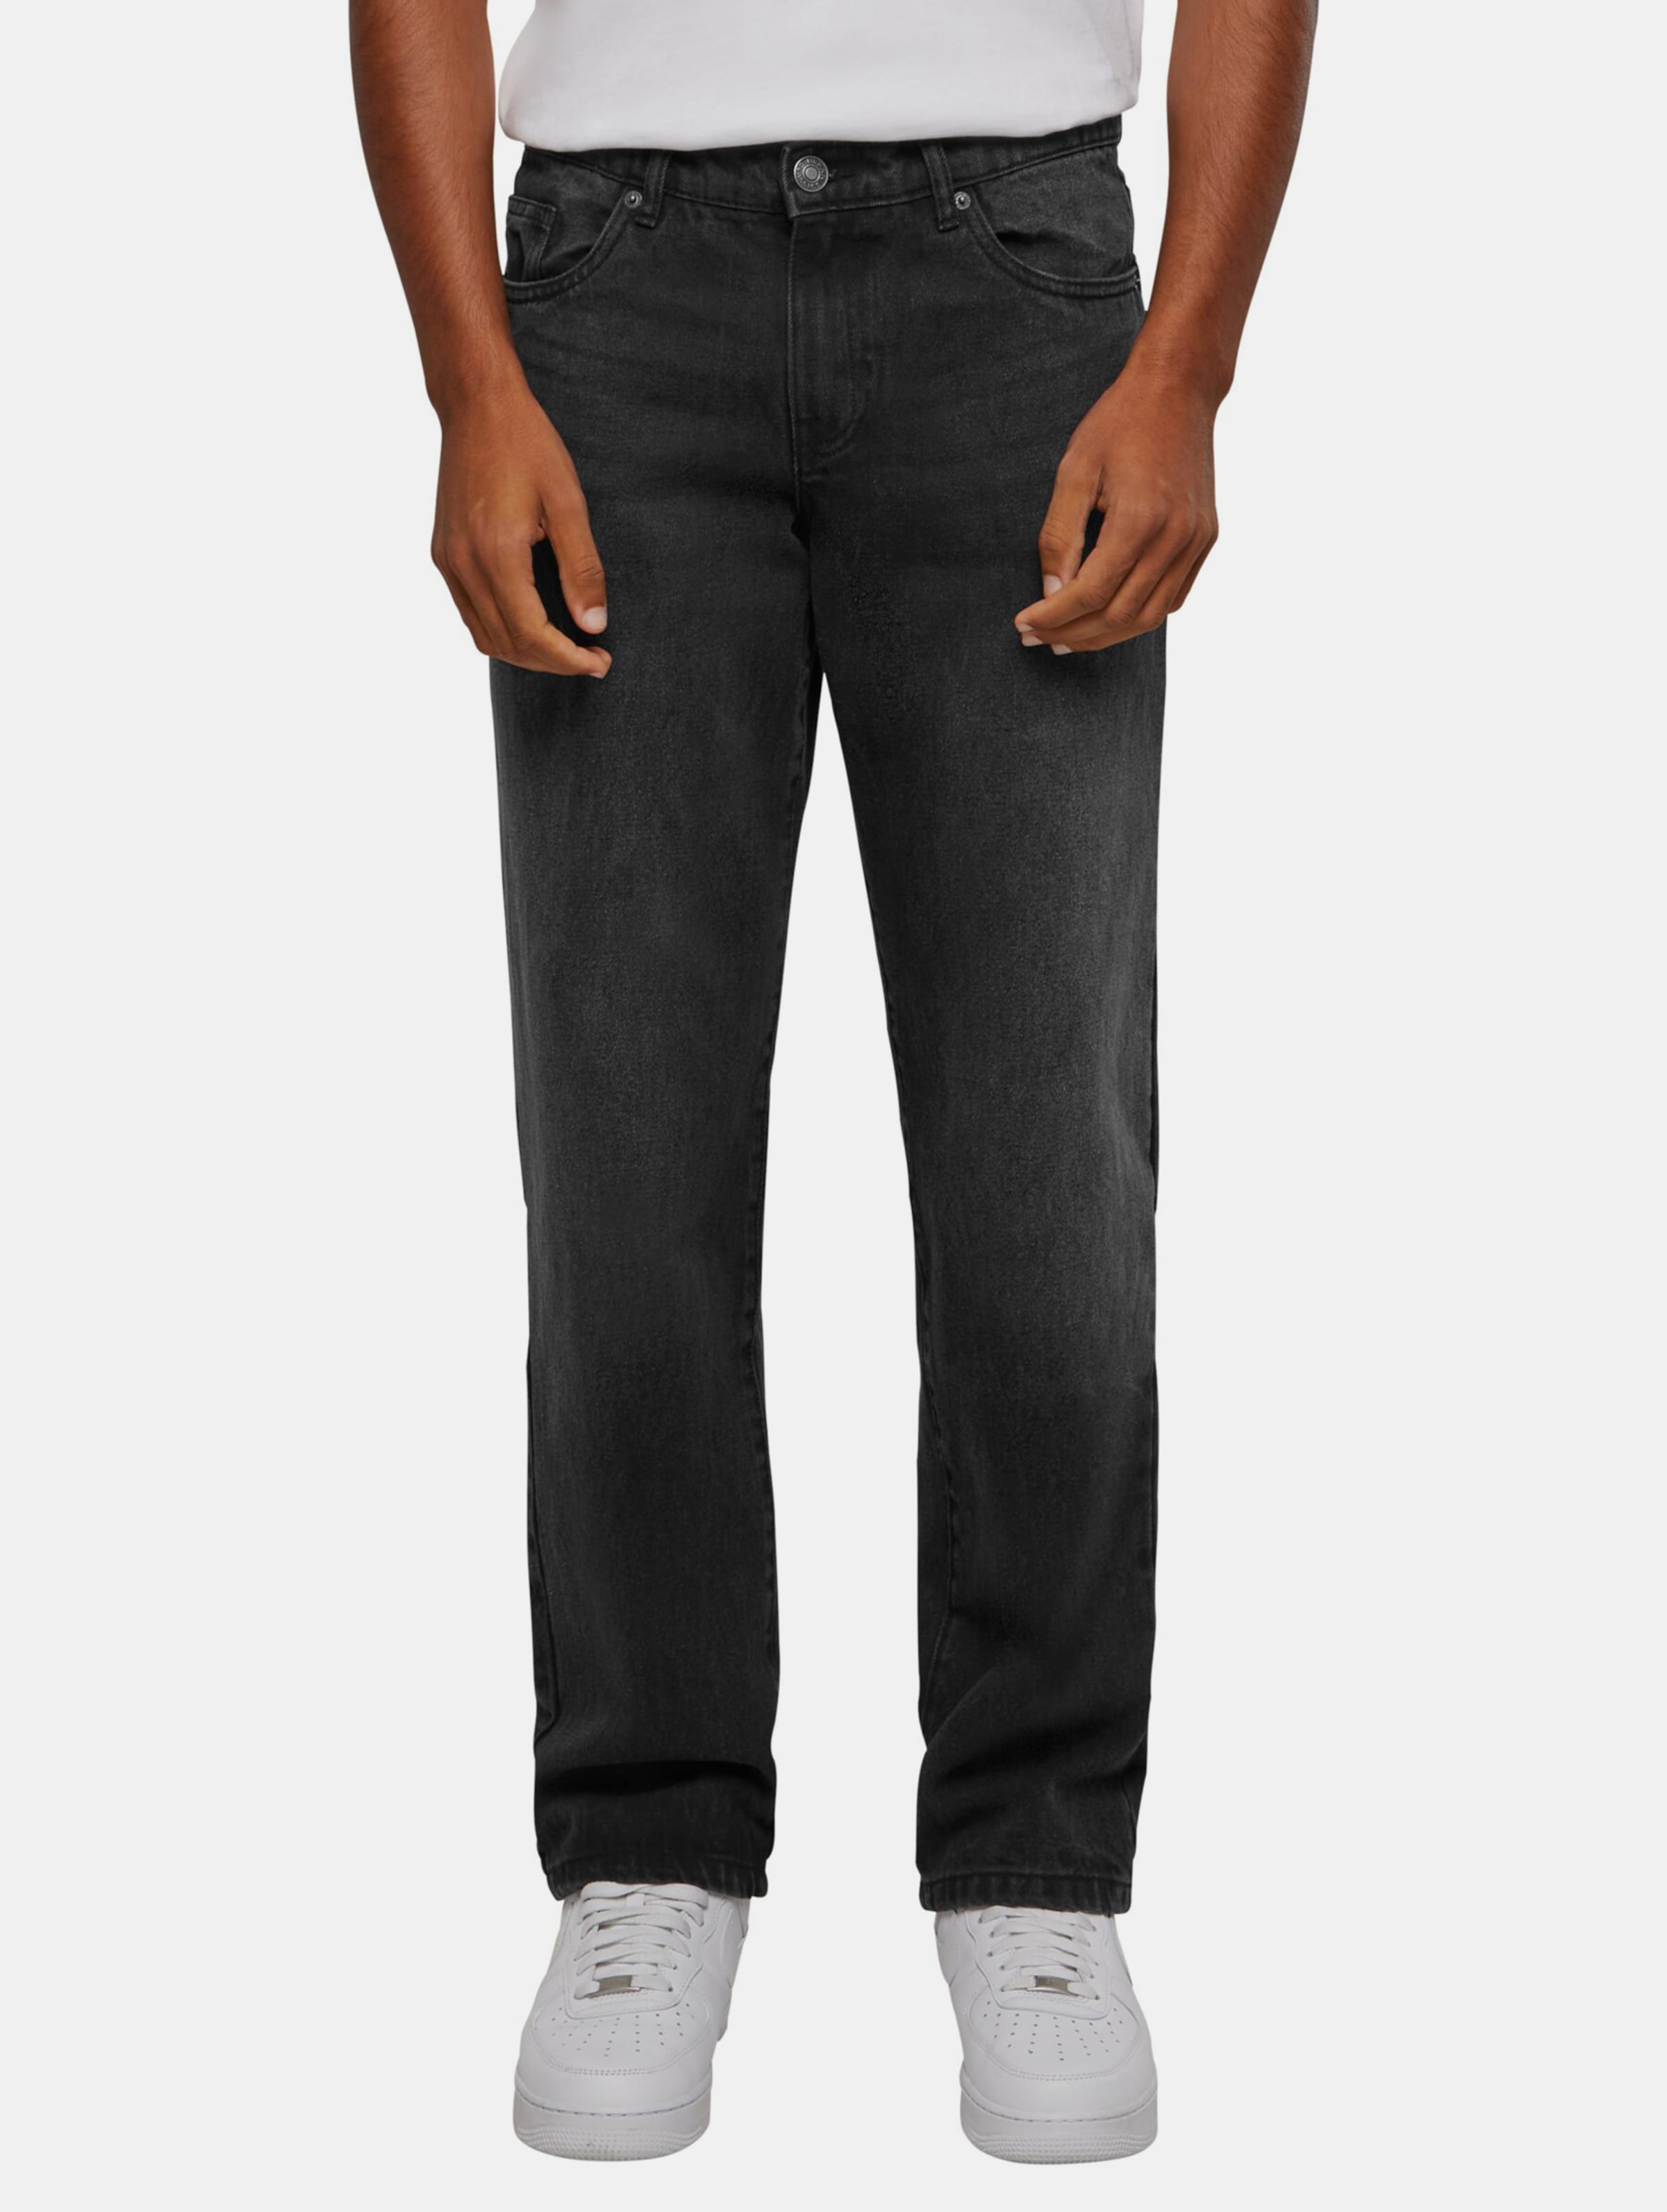 Urban Classics - Heavy Ounce Straight Fit Jeans Broek rechte pijpen - Taille, 33 inch - Zwart